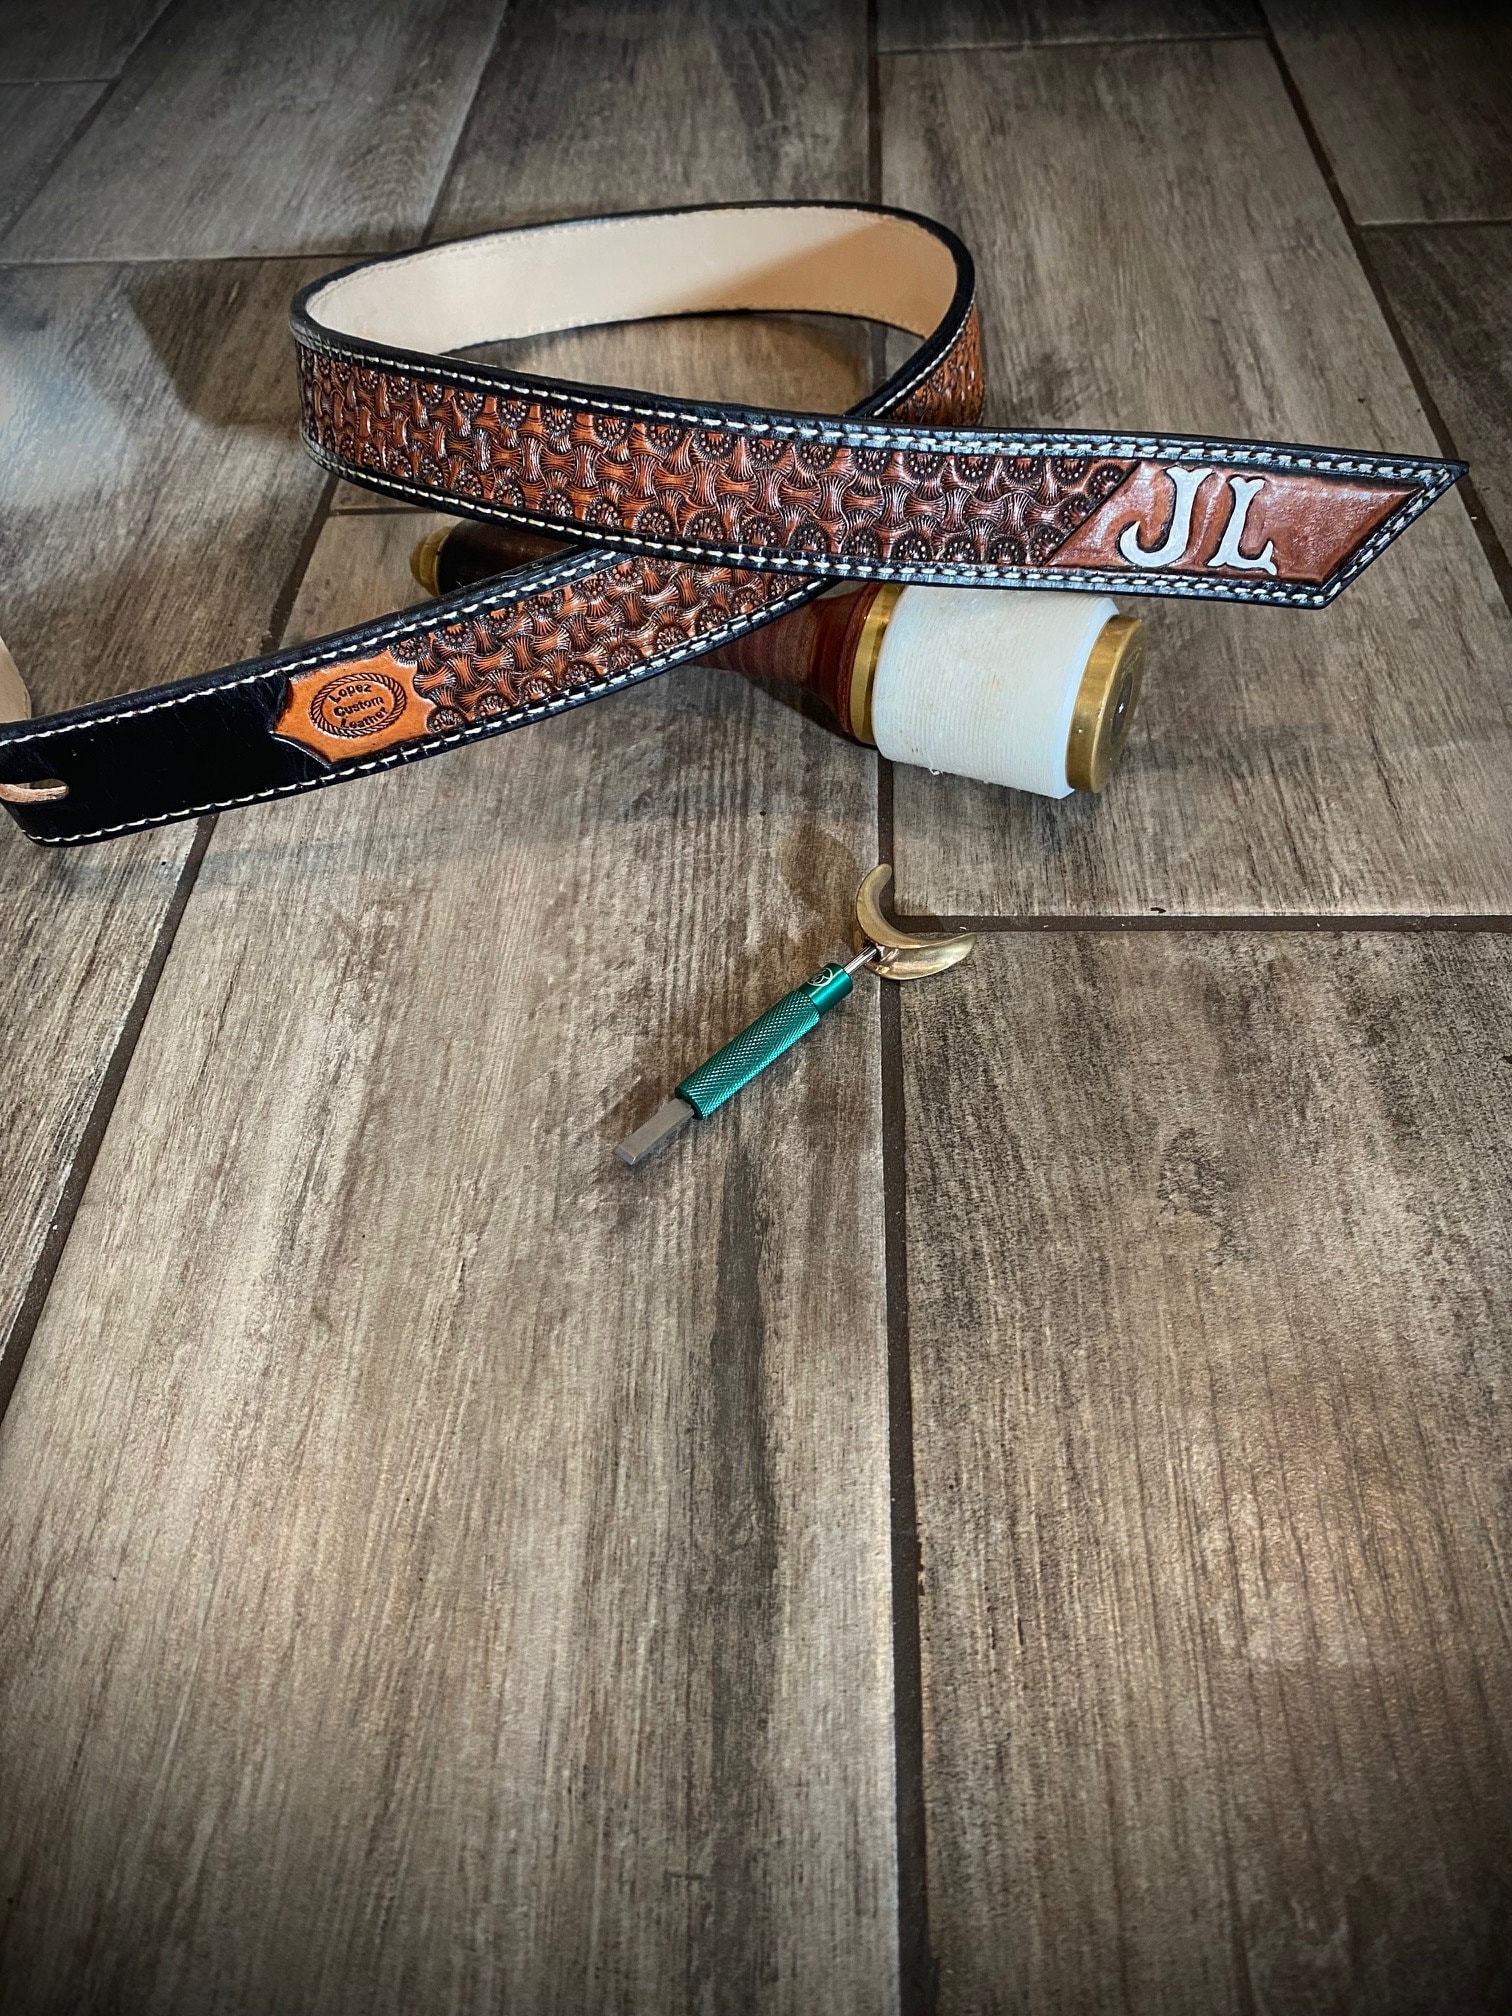 High Quality Leather Belt / Western Leather Belt / Handmade